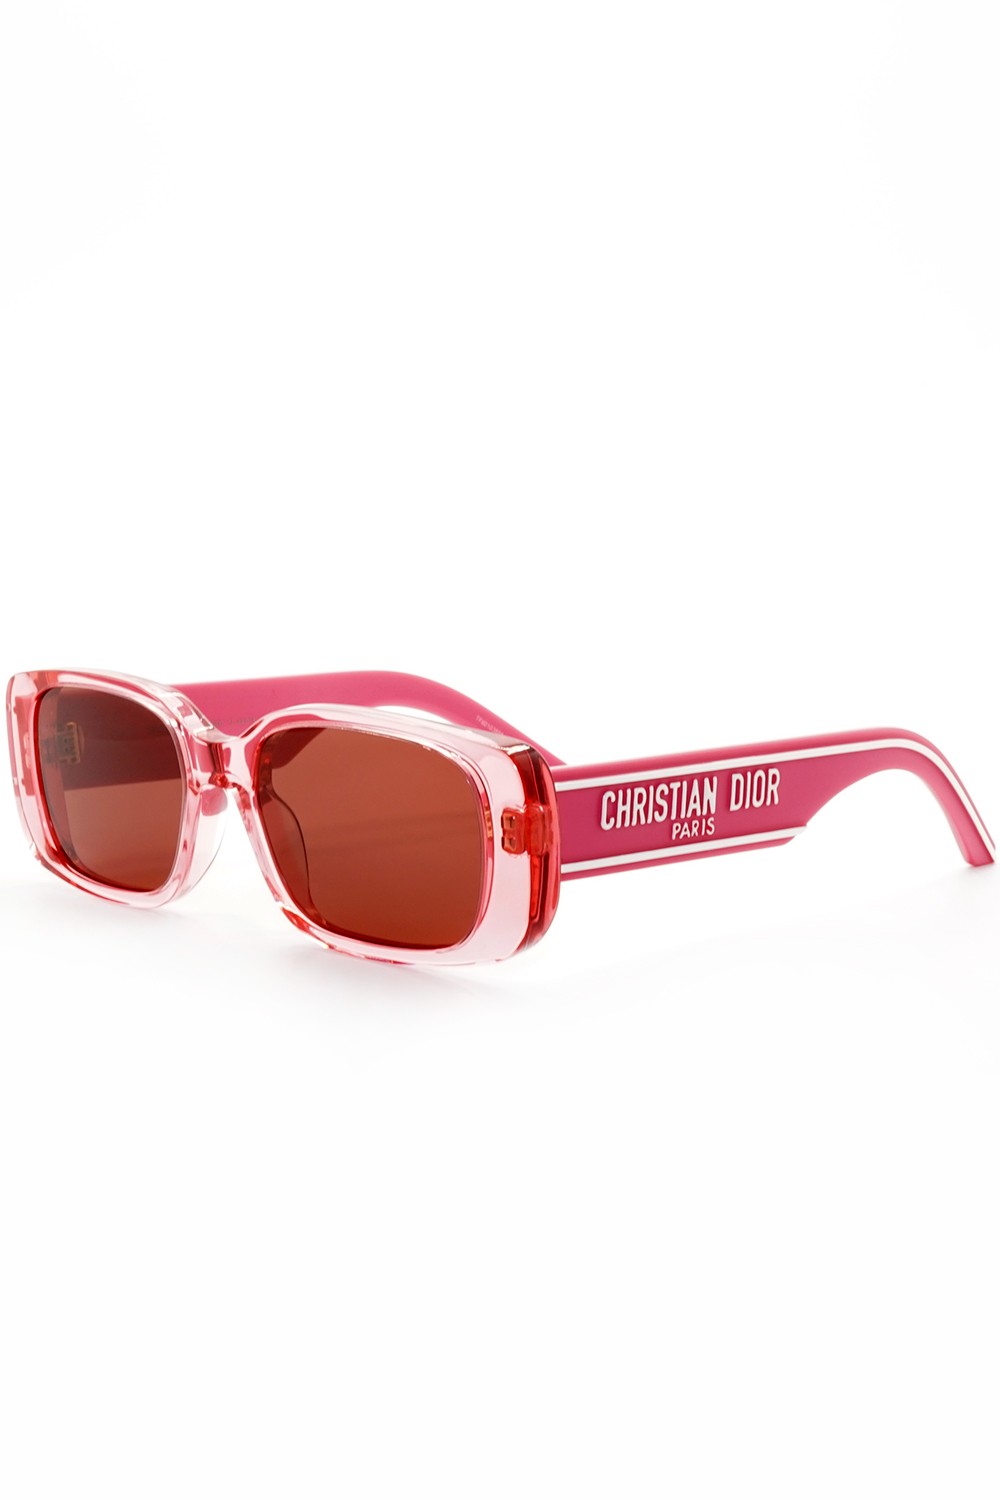 Christian Dior - Occhiali da sole in celluloide rettangolari unisex rosa - S2U